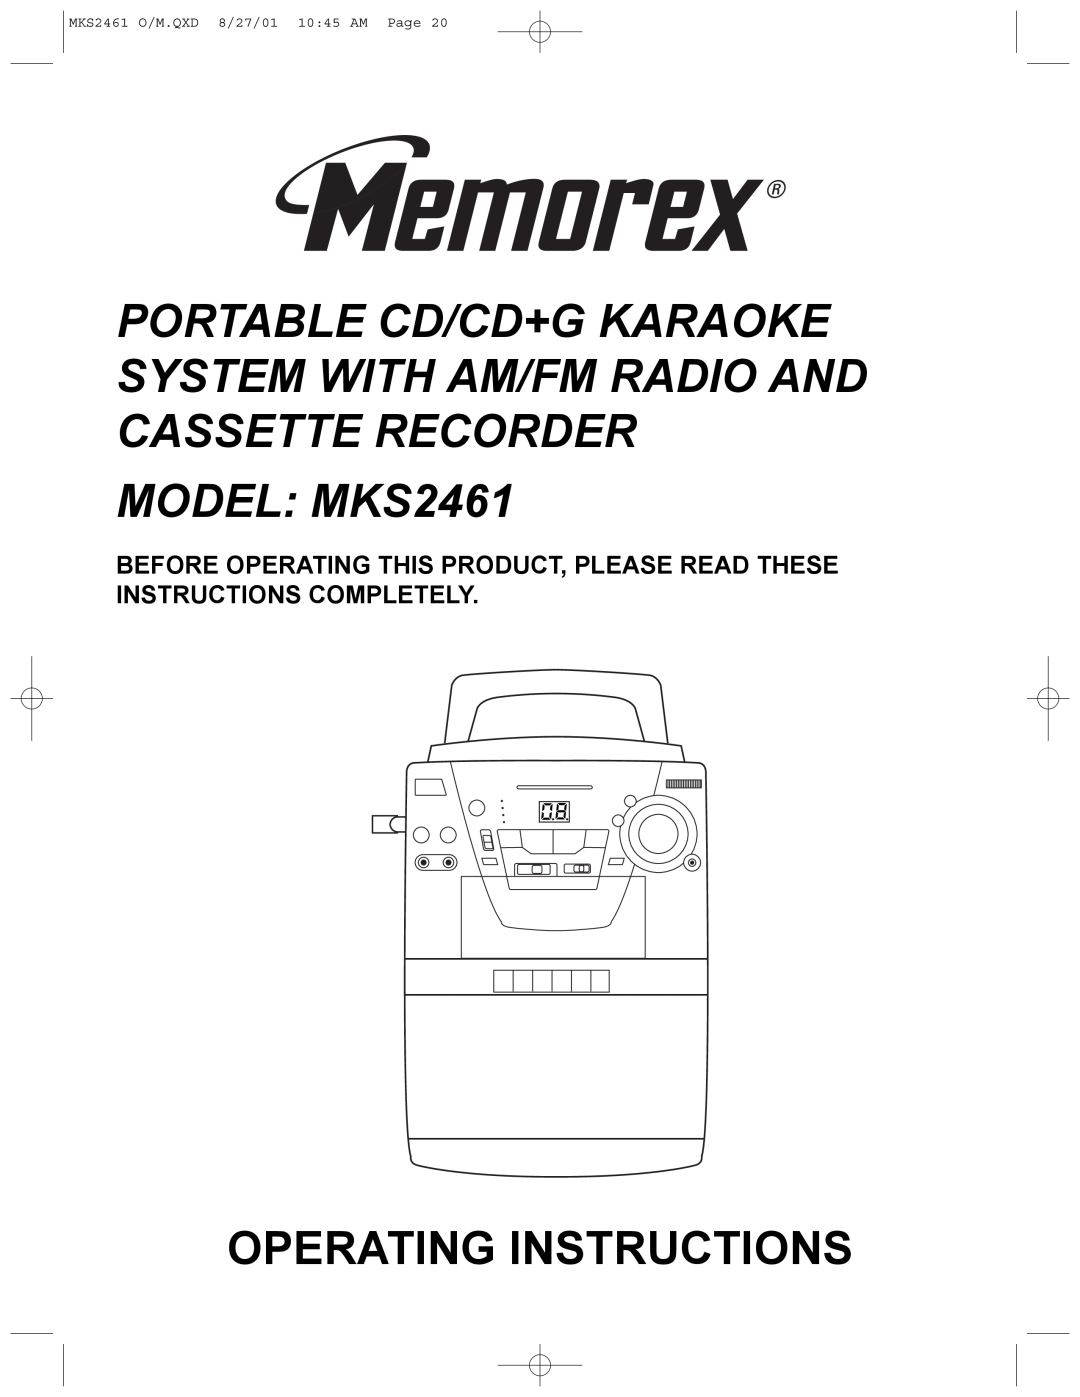 Memorex operating instructions MODEL MKS2461, Operating Instructions, MKS2461 O/M.QXD 8/27/01 10 45 AM Page 